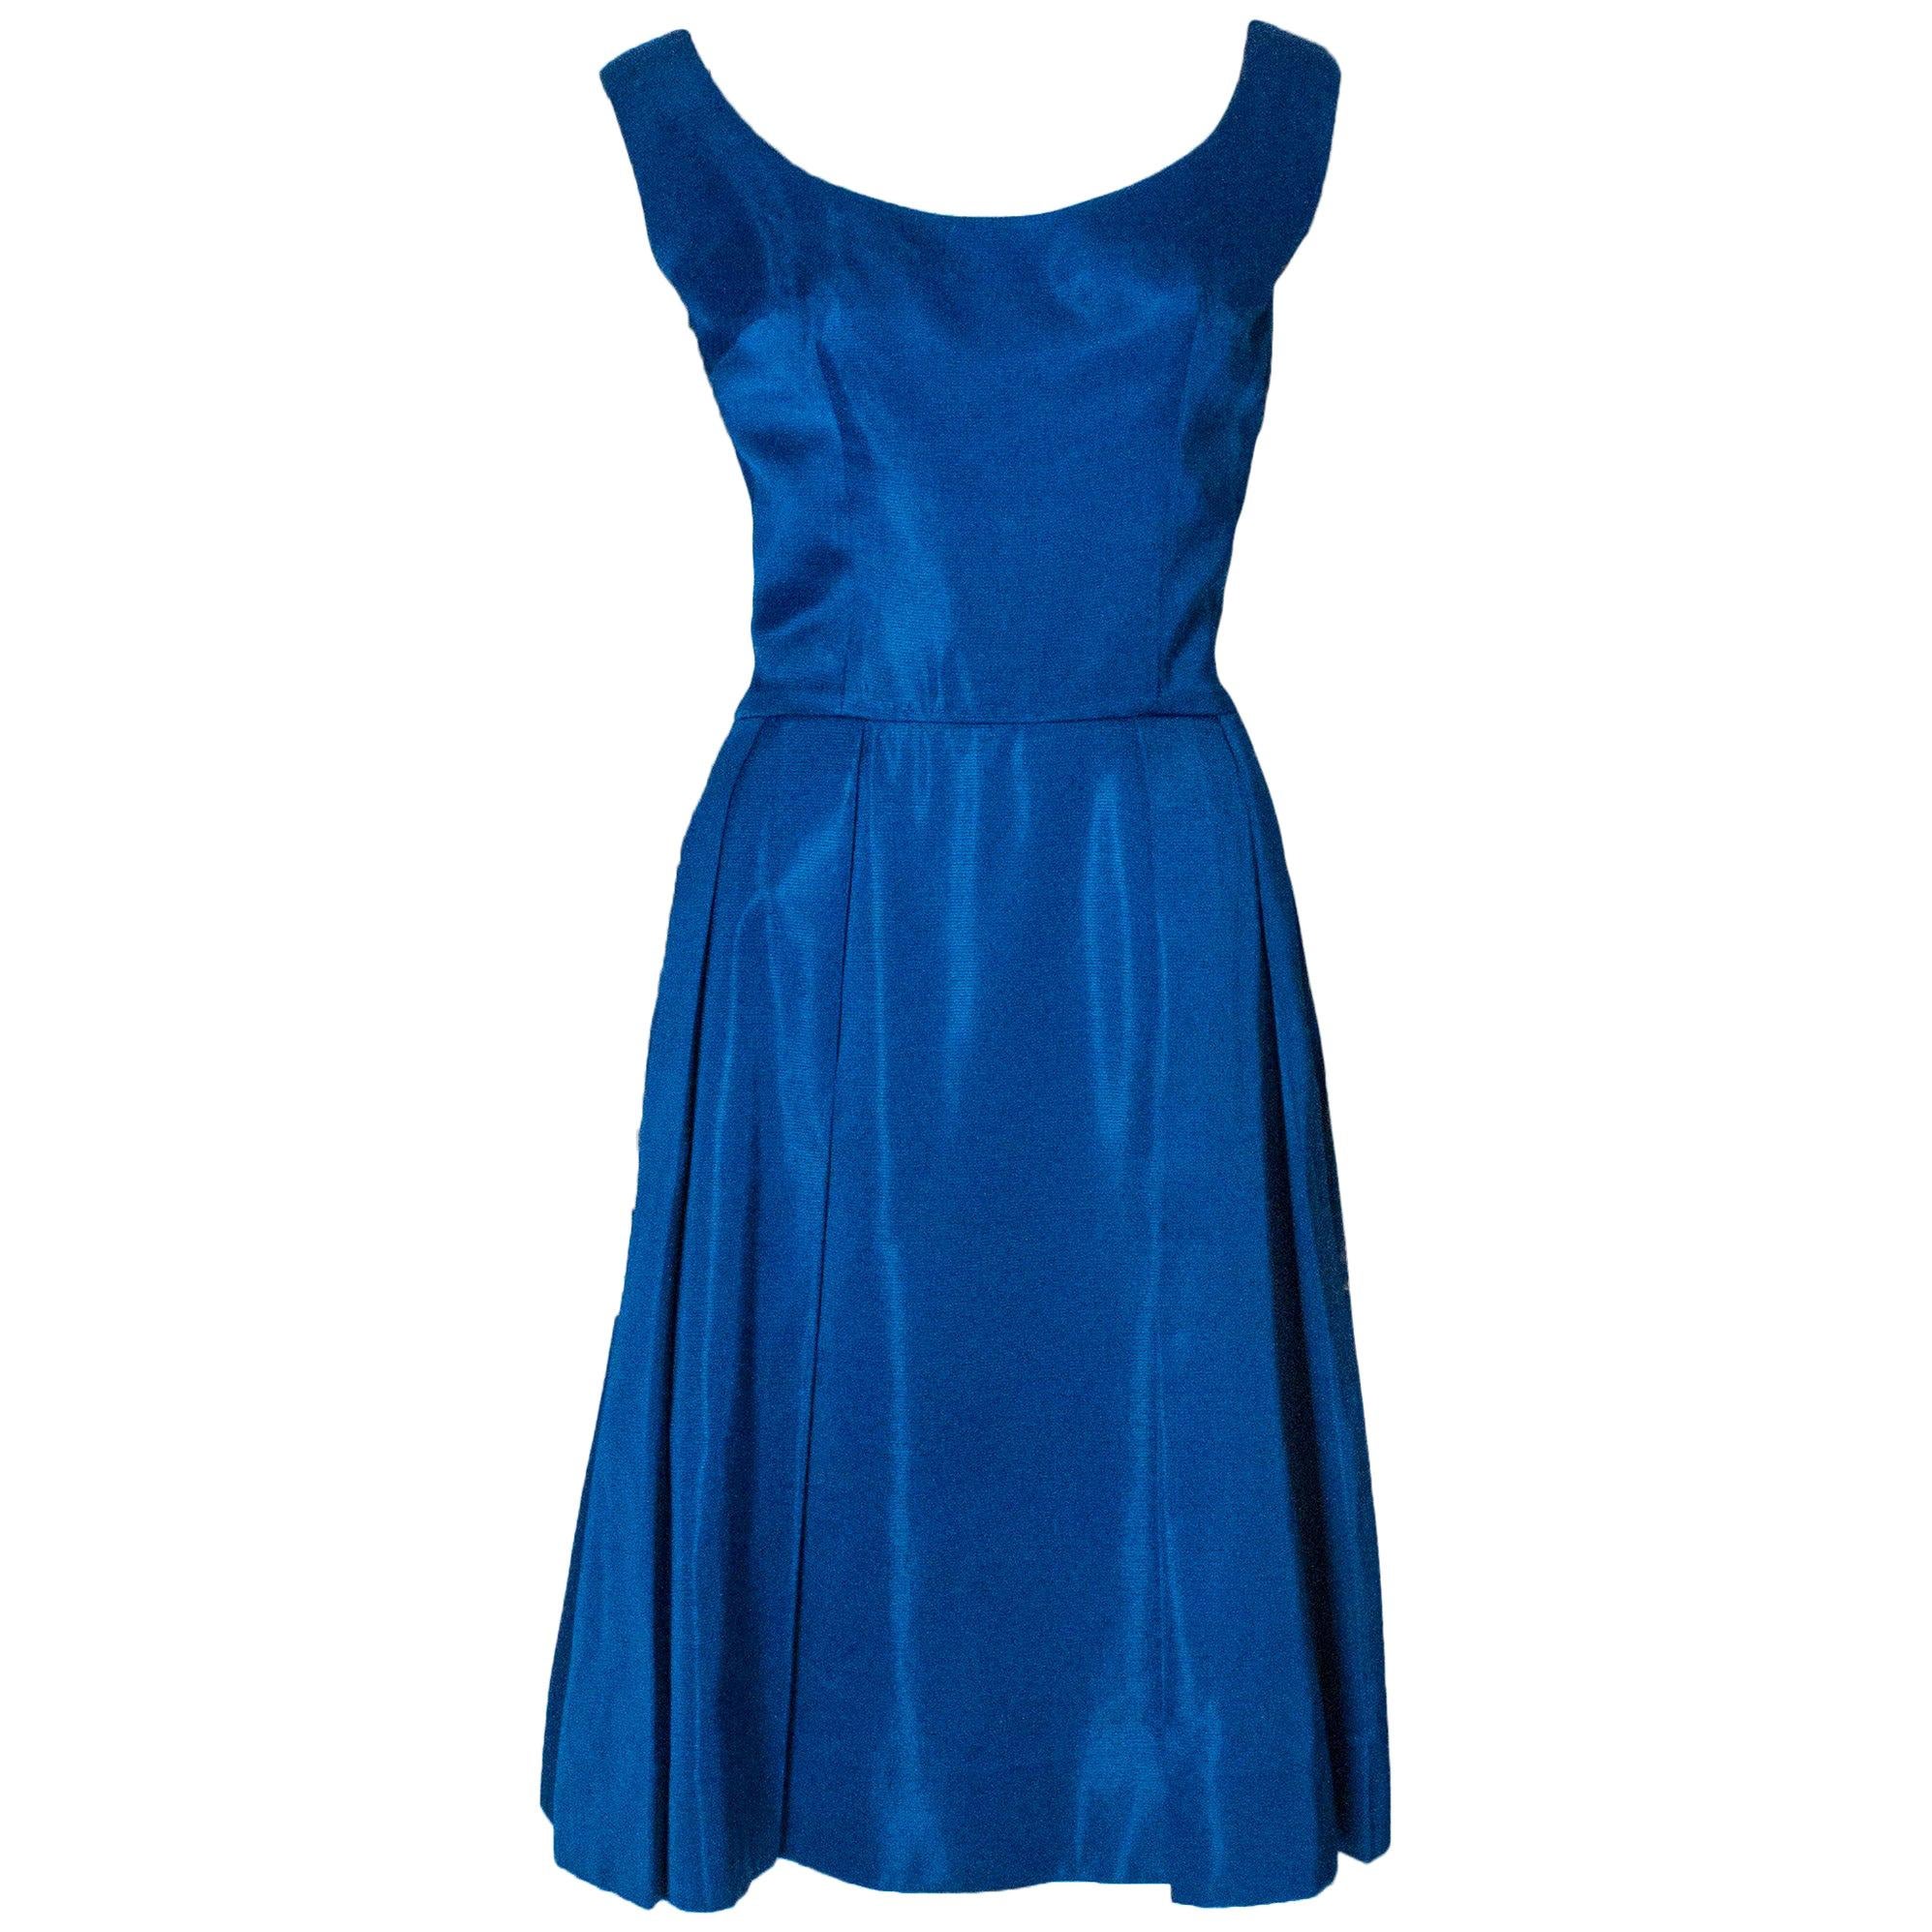 Vintage 1950s Electric Blue Cocktail Dress For Sale